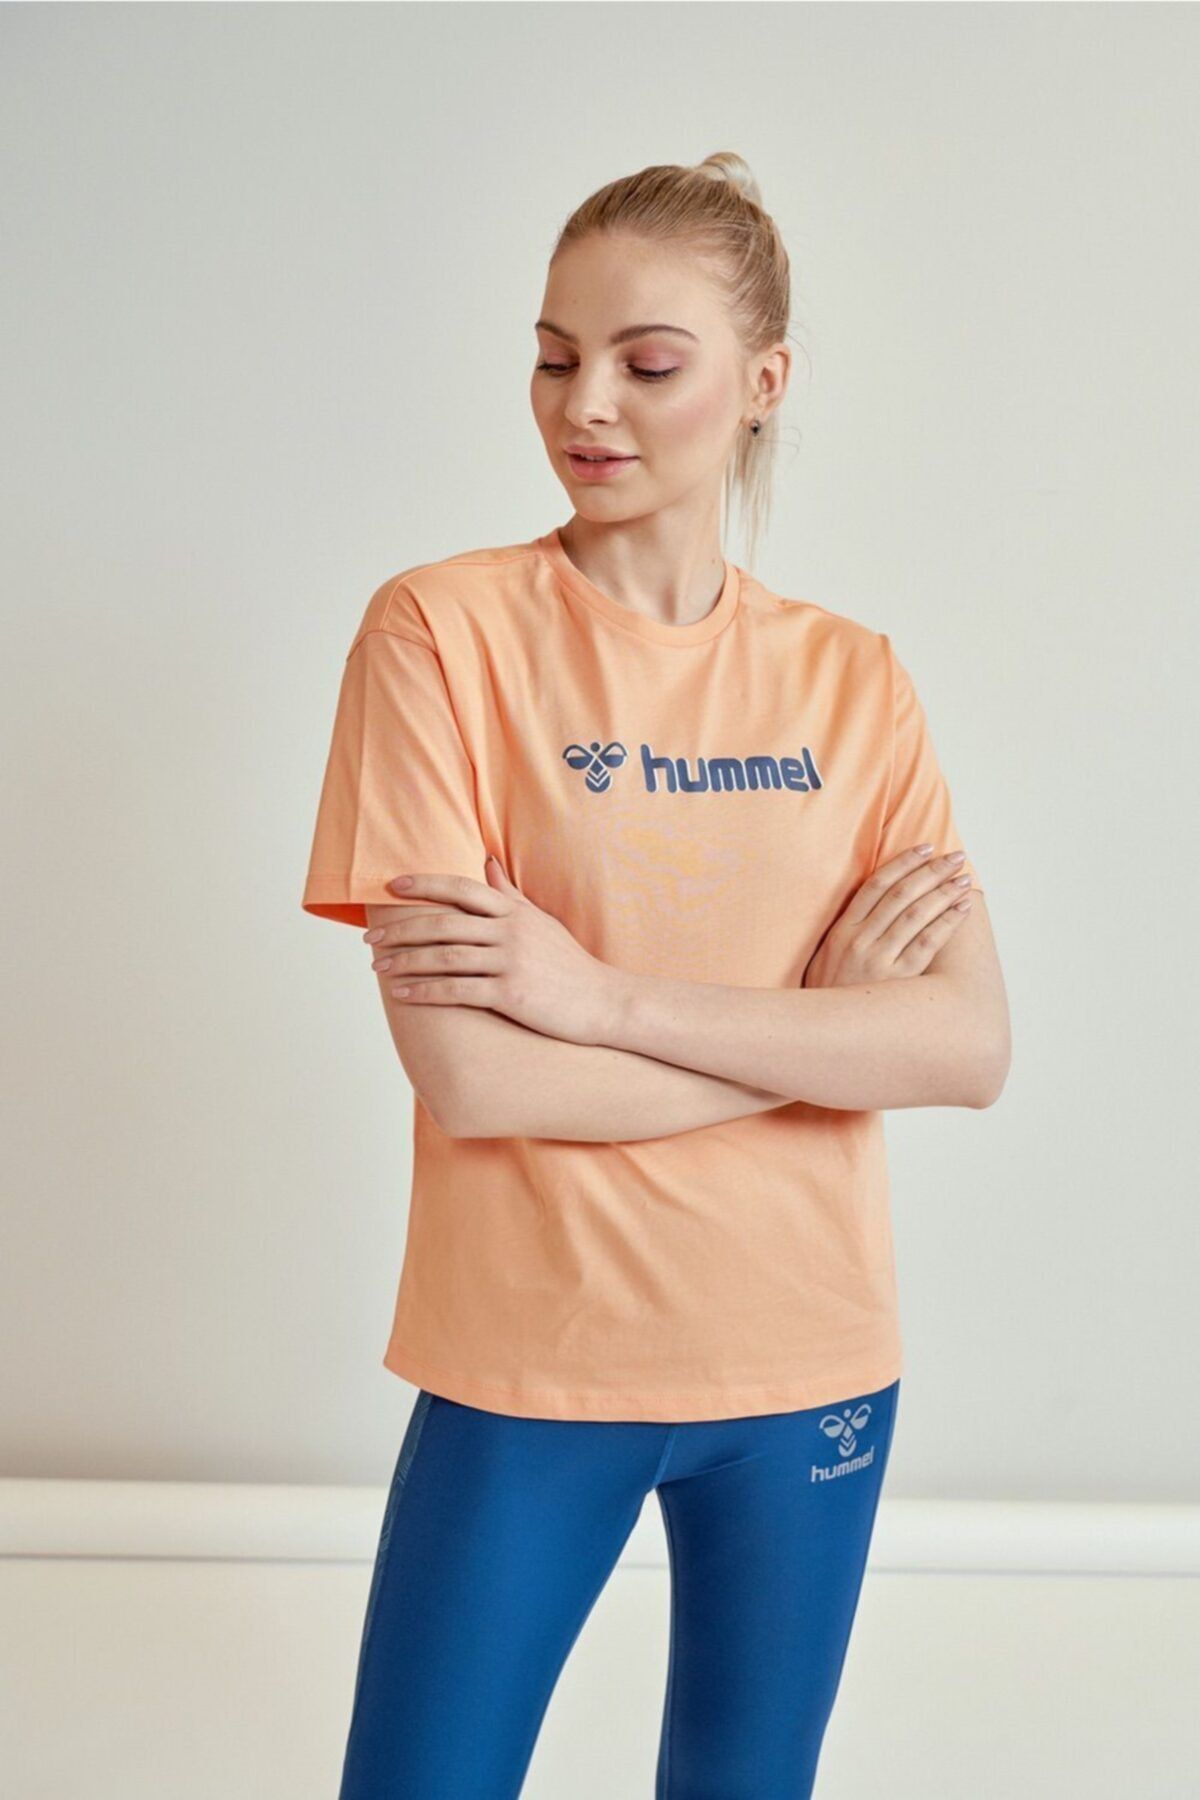 hummel Gudrun Kadın Kısa Kollu T-Shirt